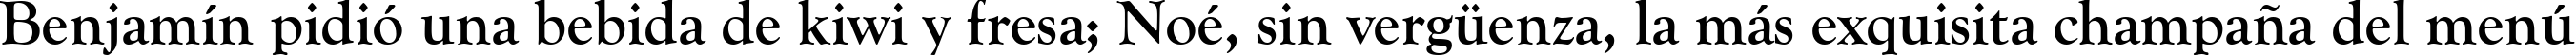 Пример написания шрифтом Goudy Old Style Bold текста на испанском